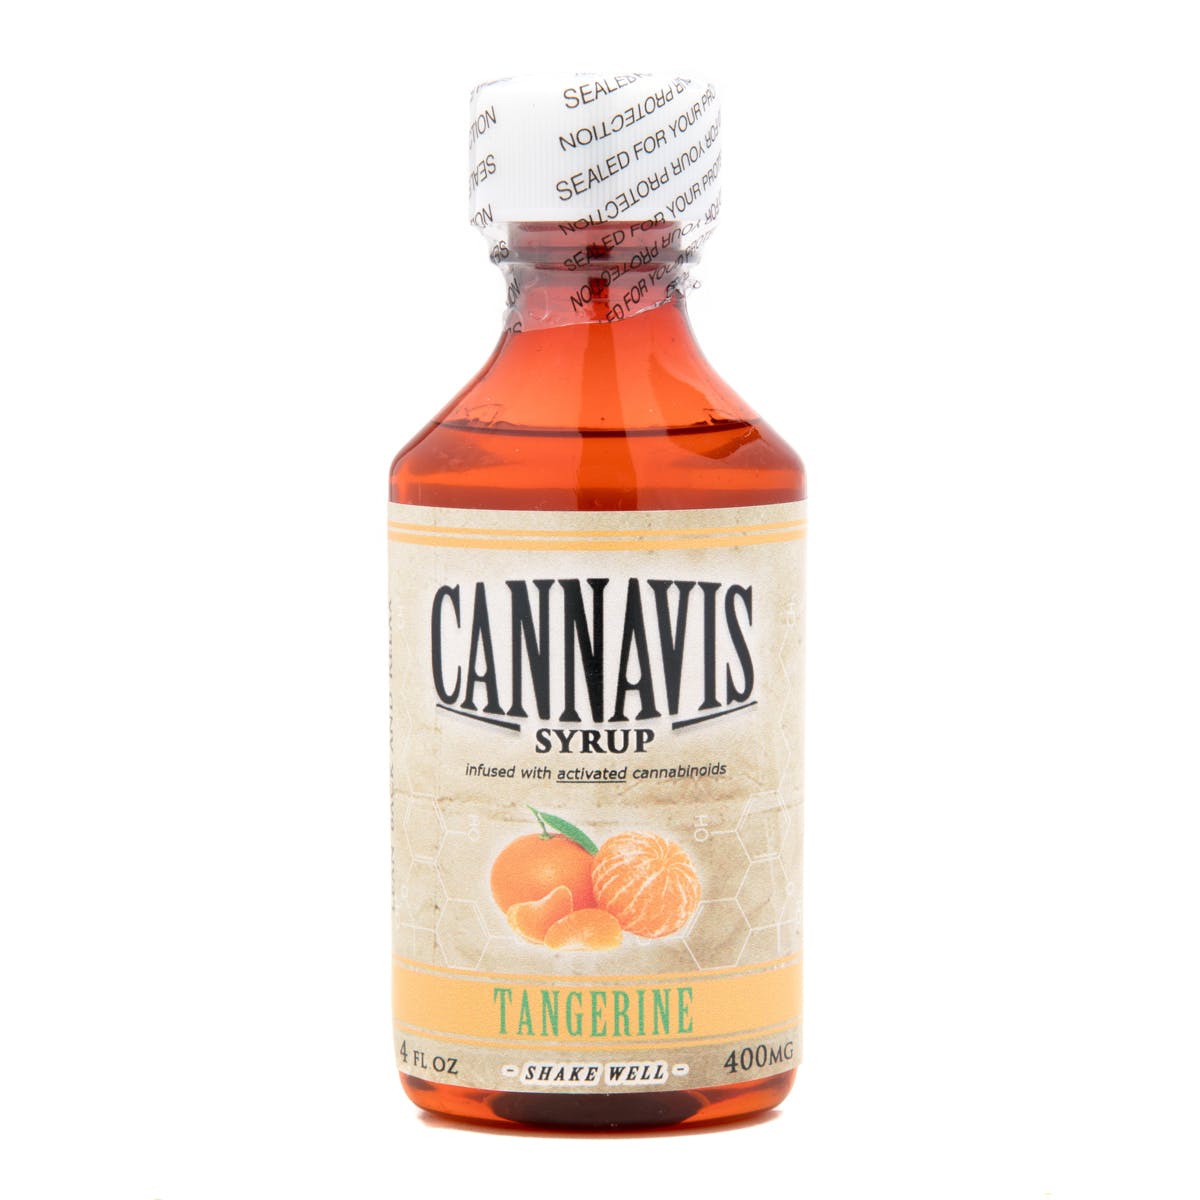 Cannavis Syrup, Tangerine 400mg